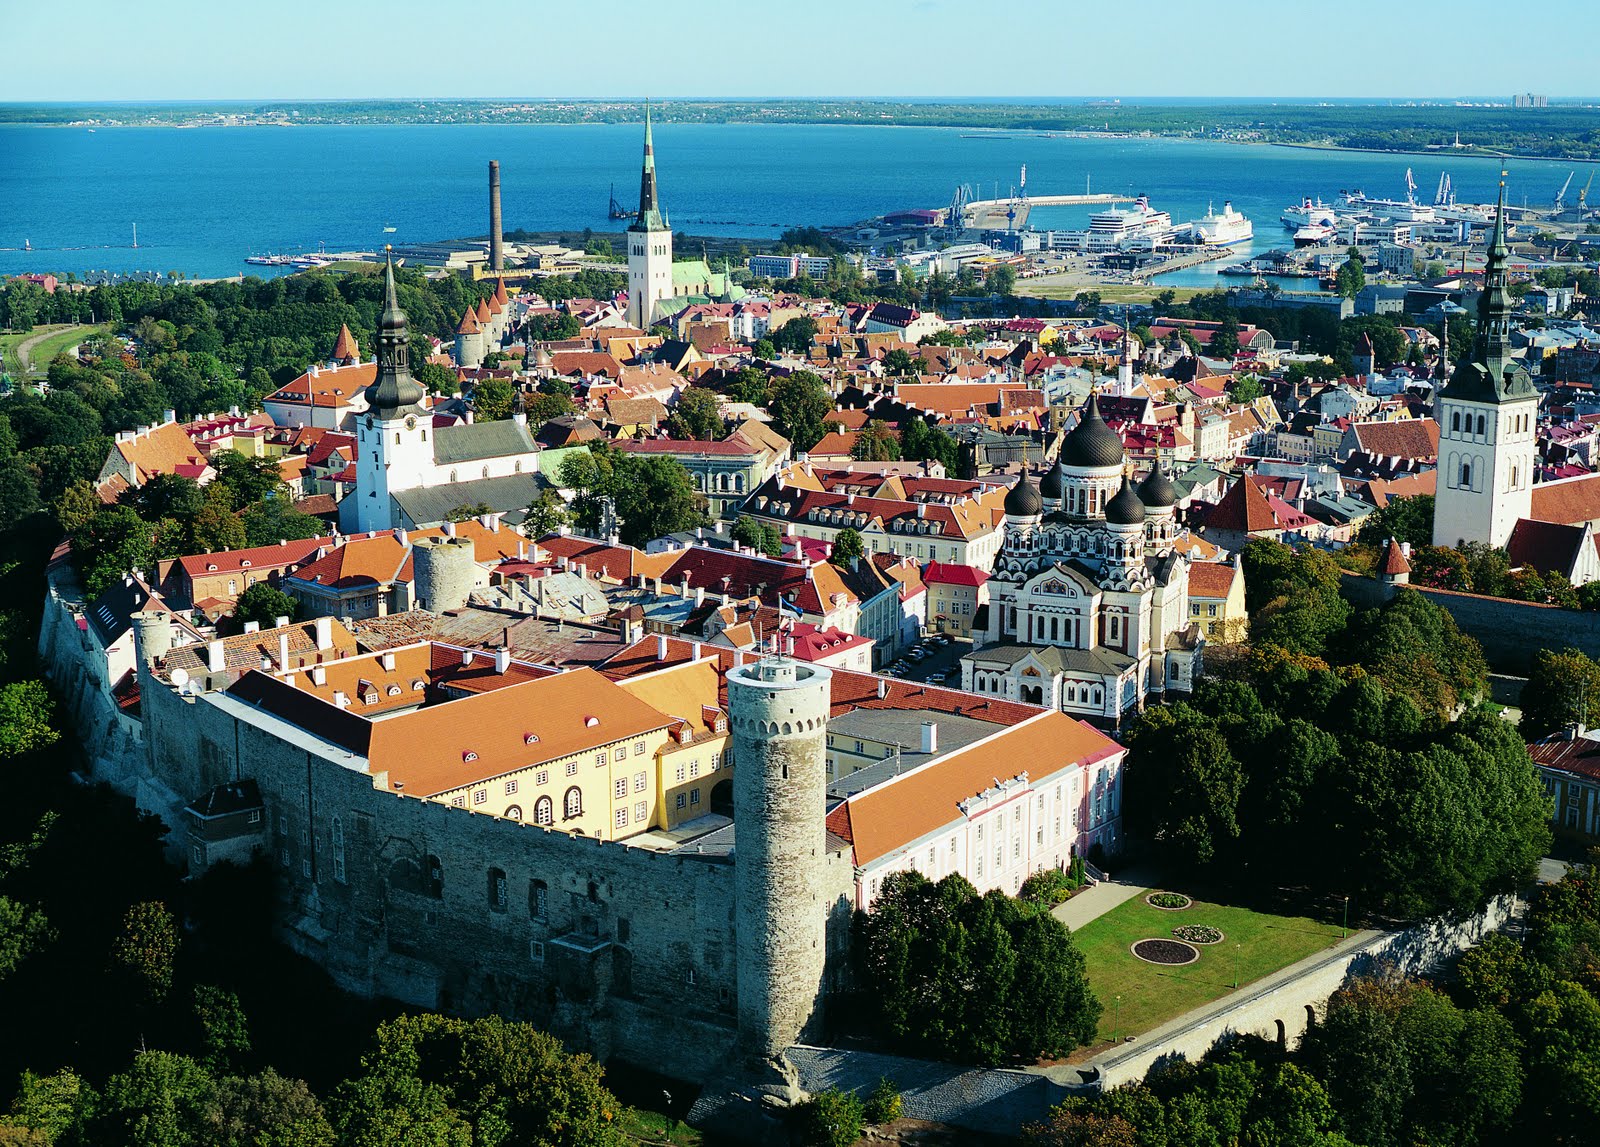 Travel Destinations for this August – Tallinn, Estonia